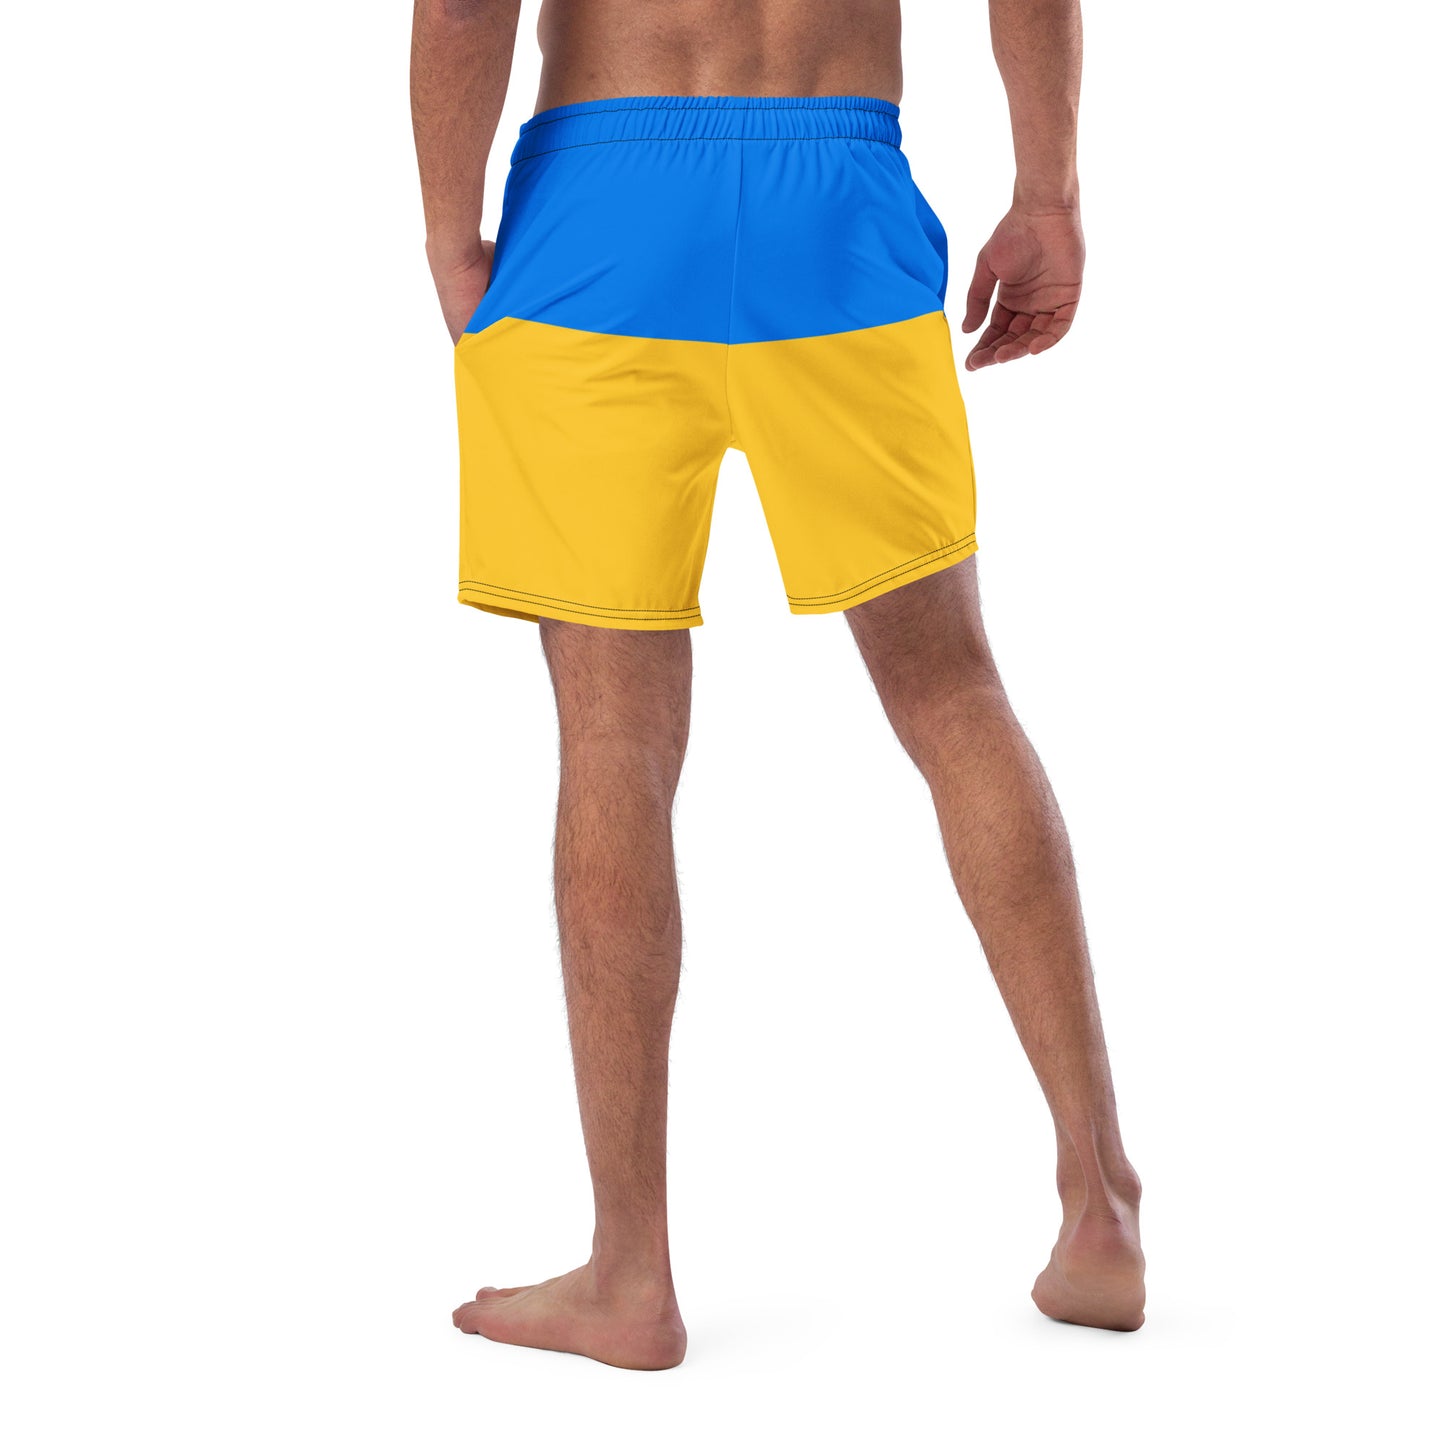 Blue Yellow Colorblock Men's swim trunks